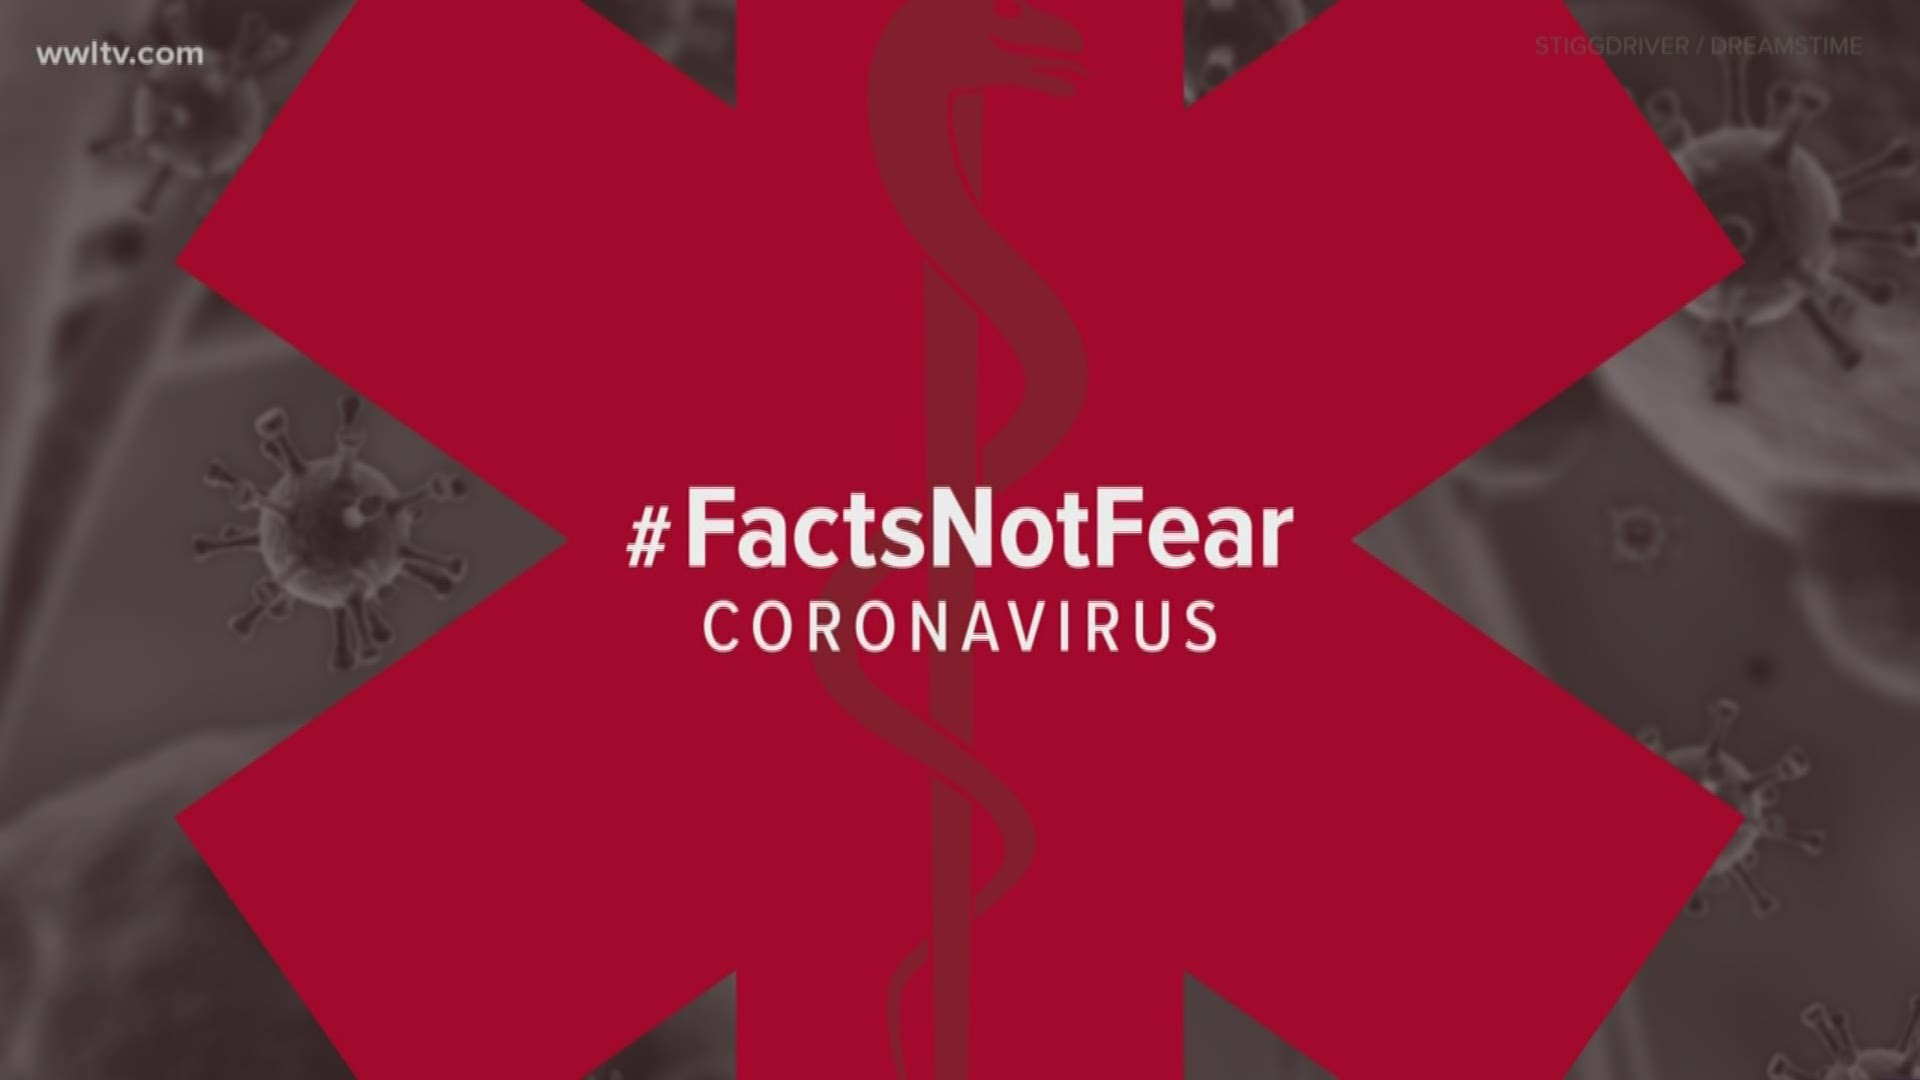 No cases of coronavirus have been reported in Louisiana.